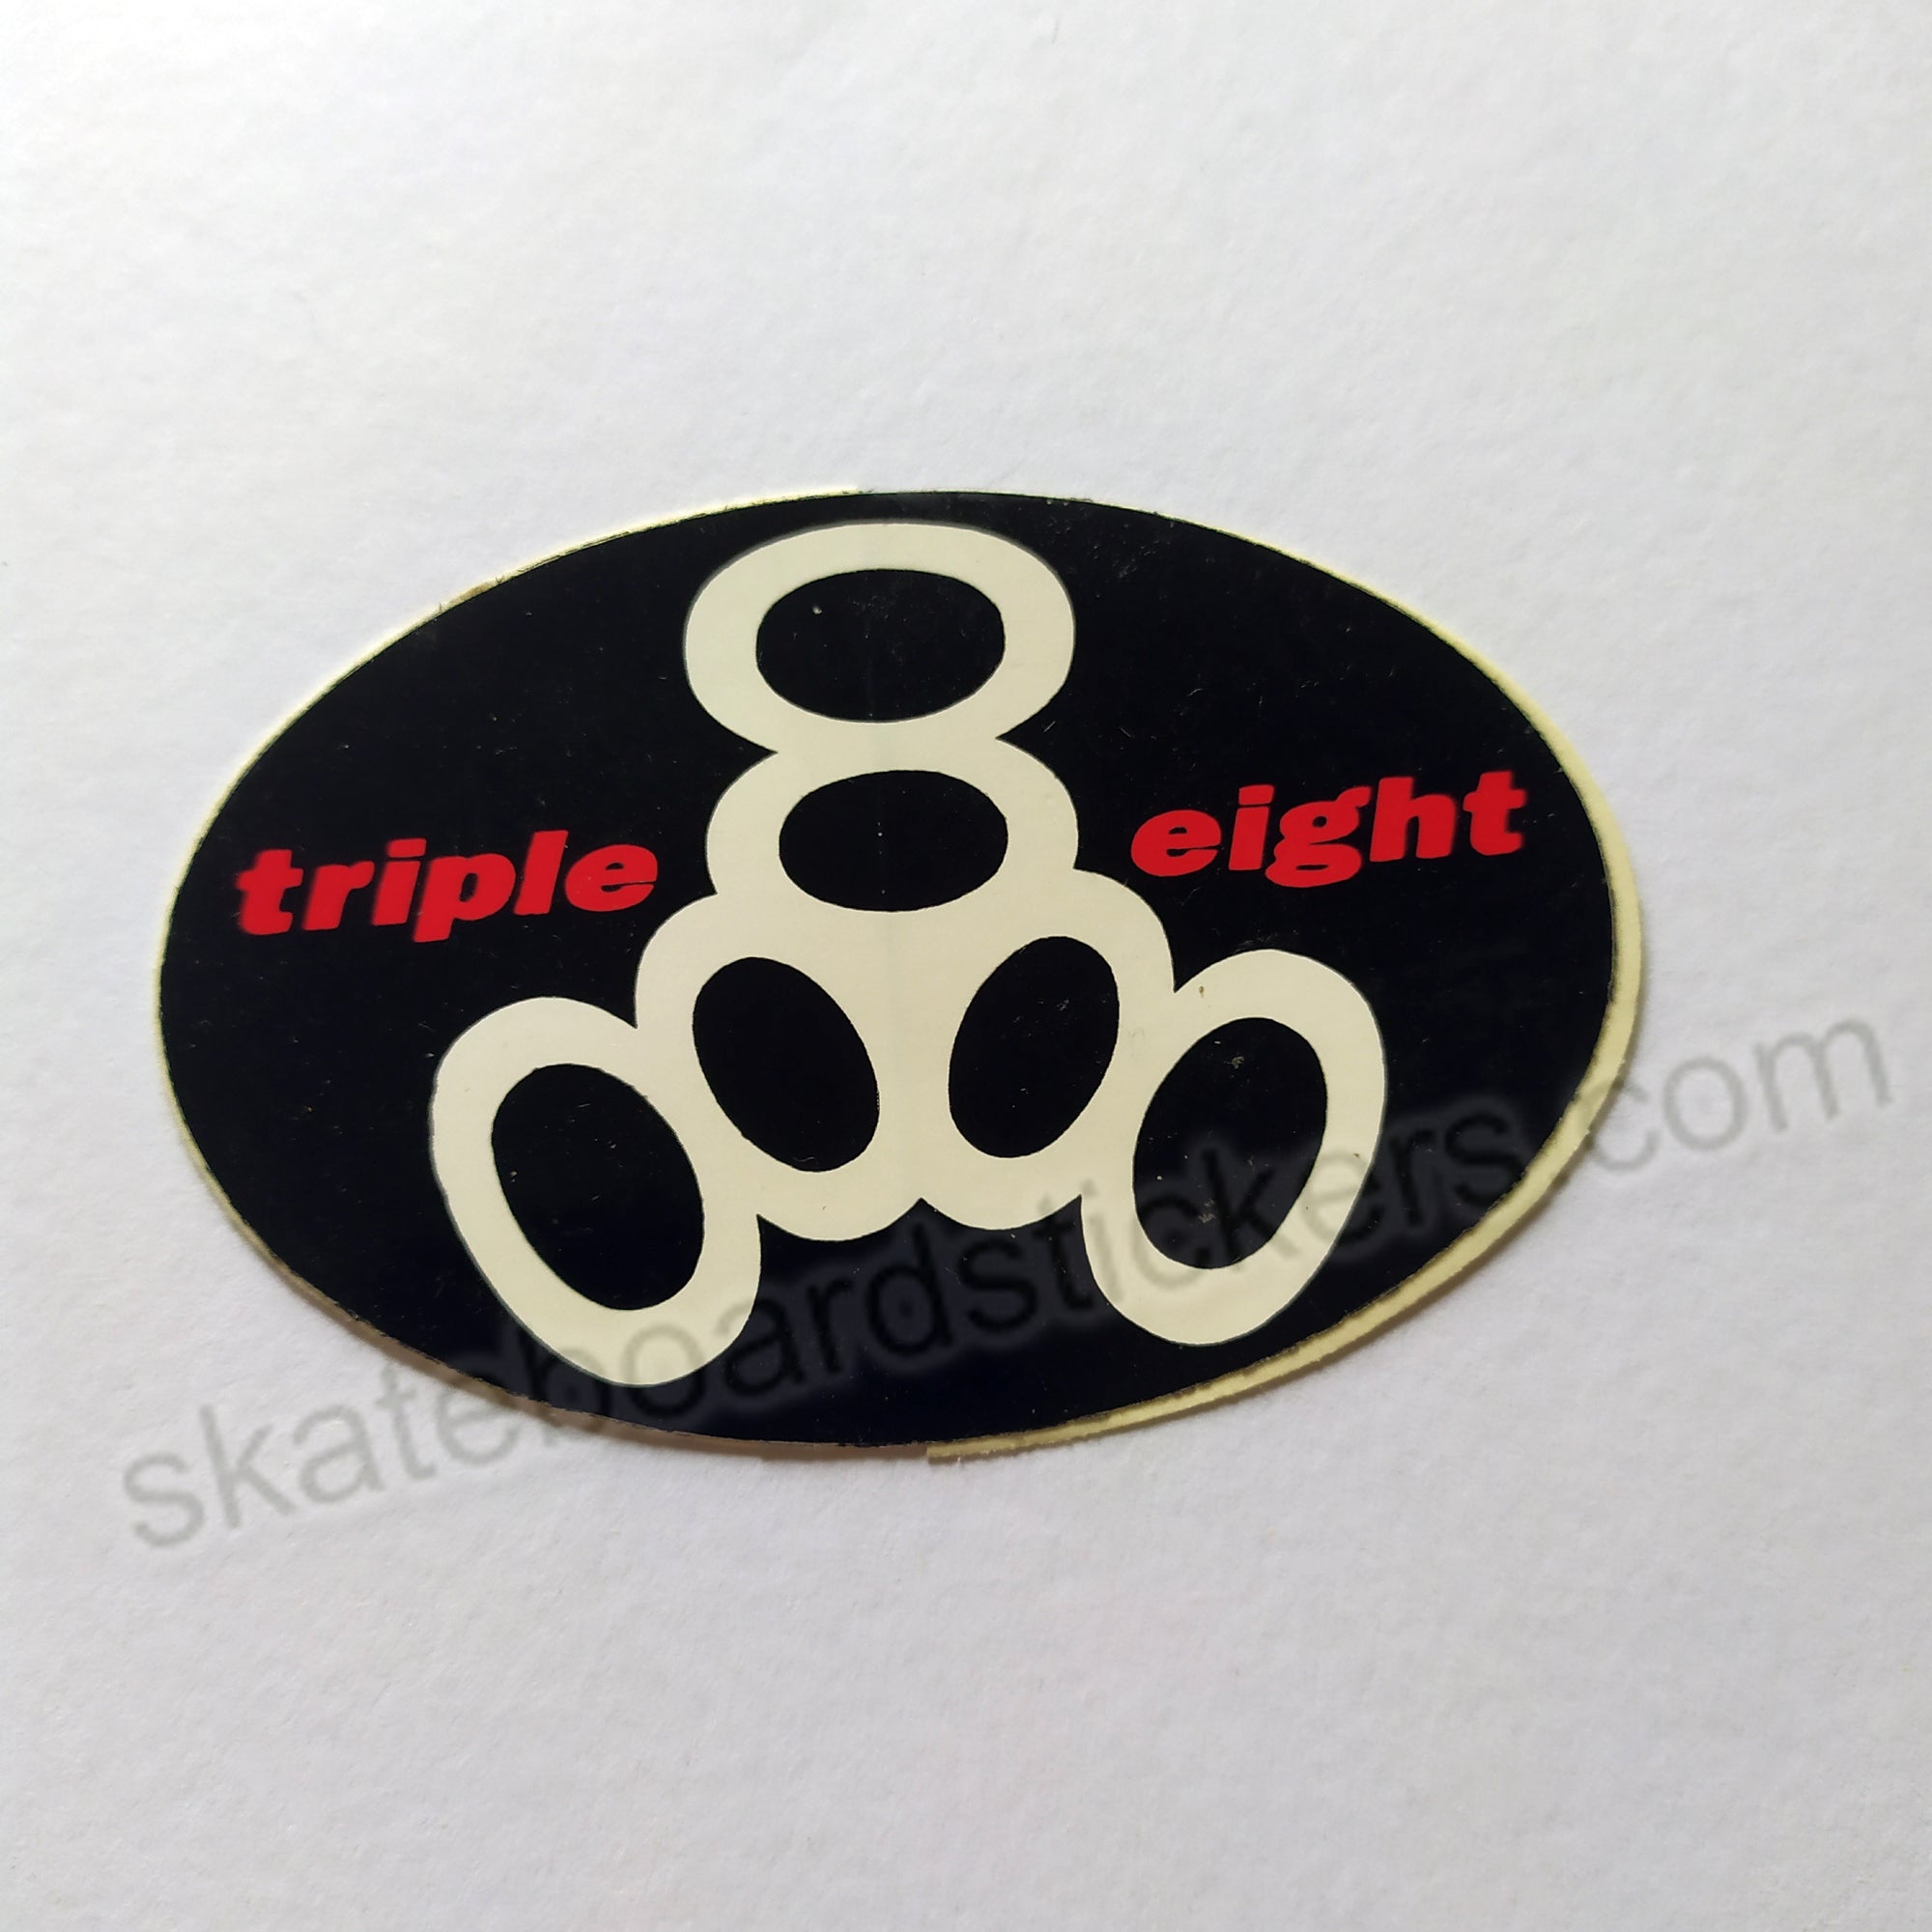 Triple 8 Skateboad Sticker - SkateboardStickers.com